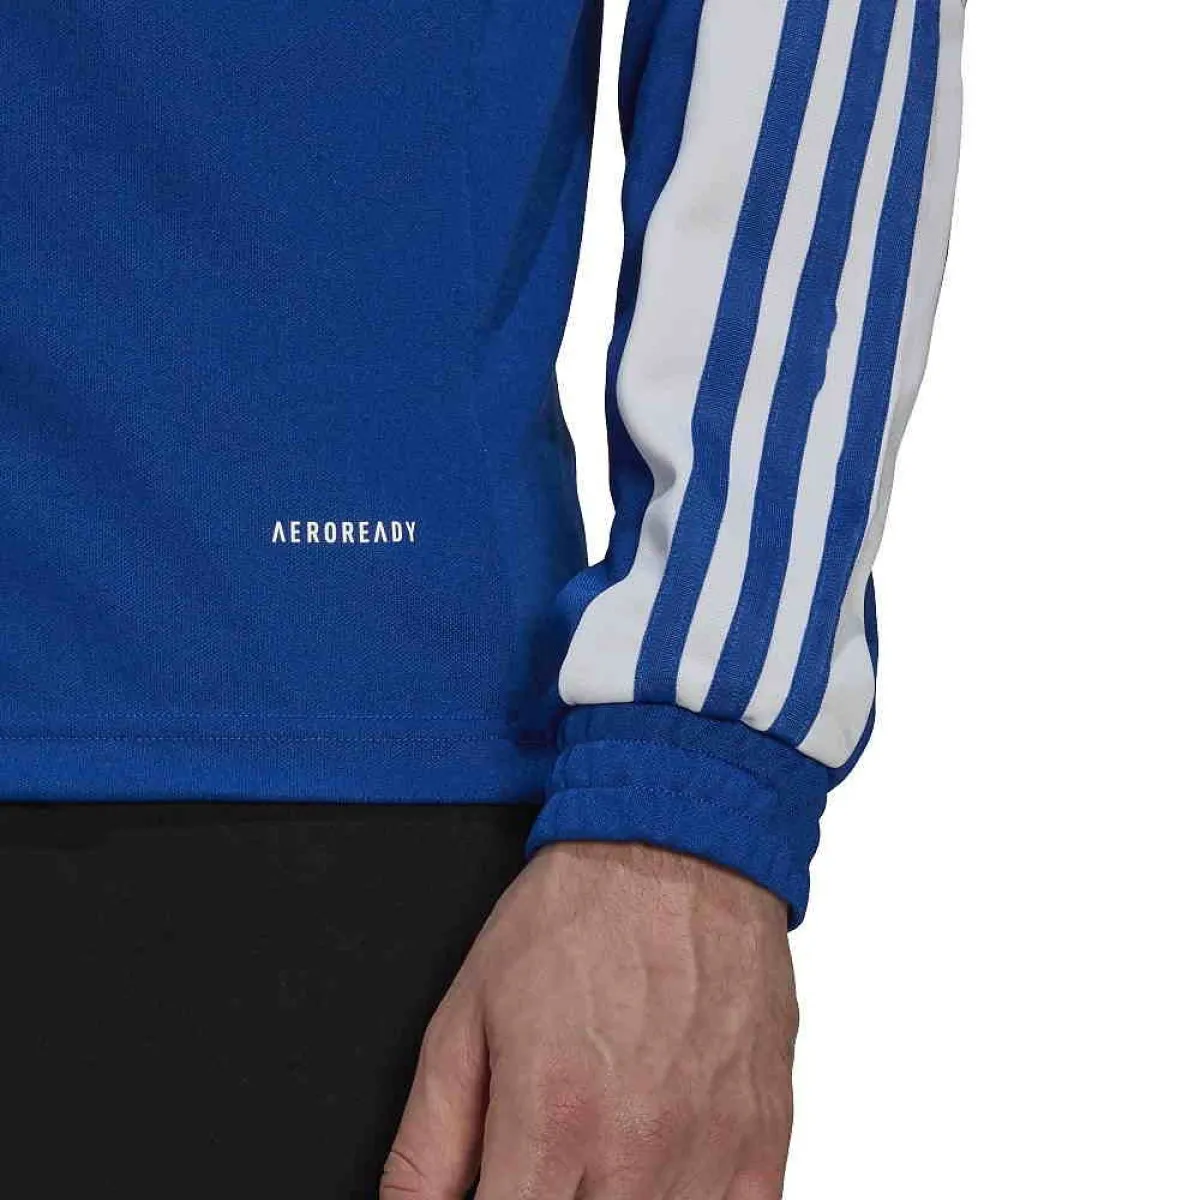 adidas Squadra 21 Zip Sweater blue/white